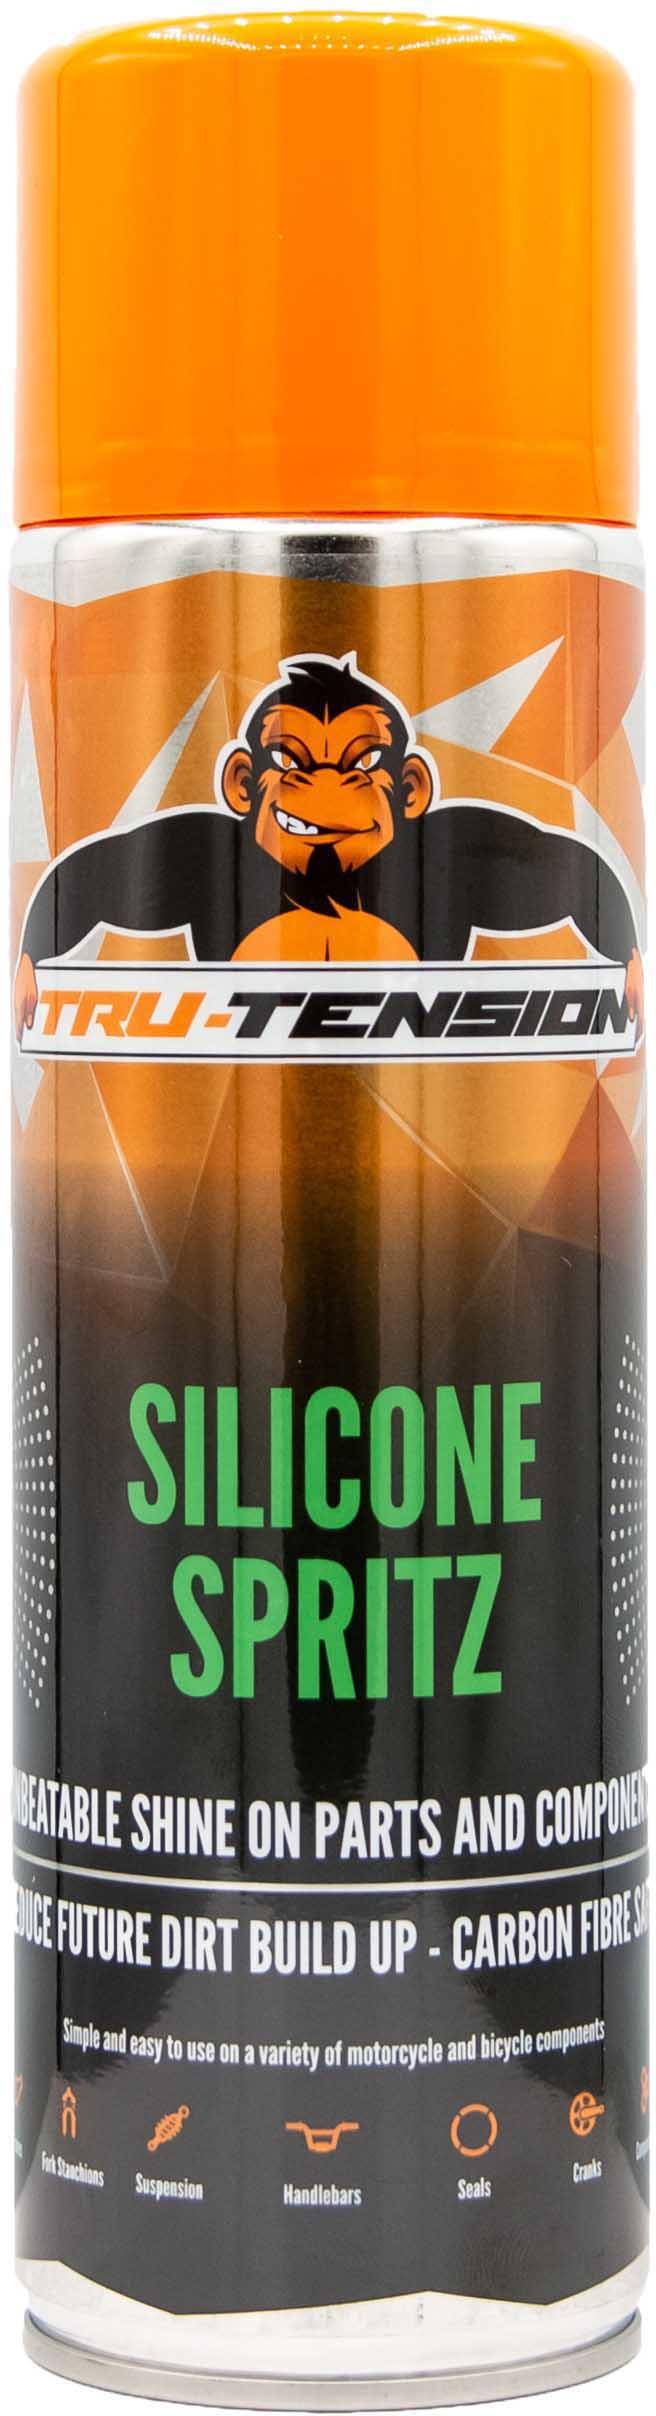 Tru-Tension Silicone Spritz